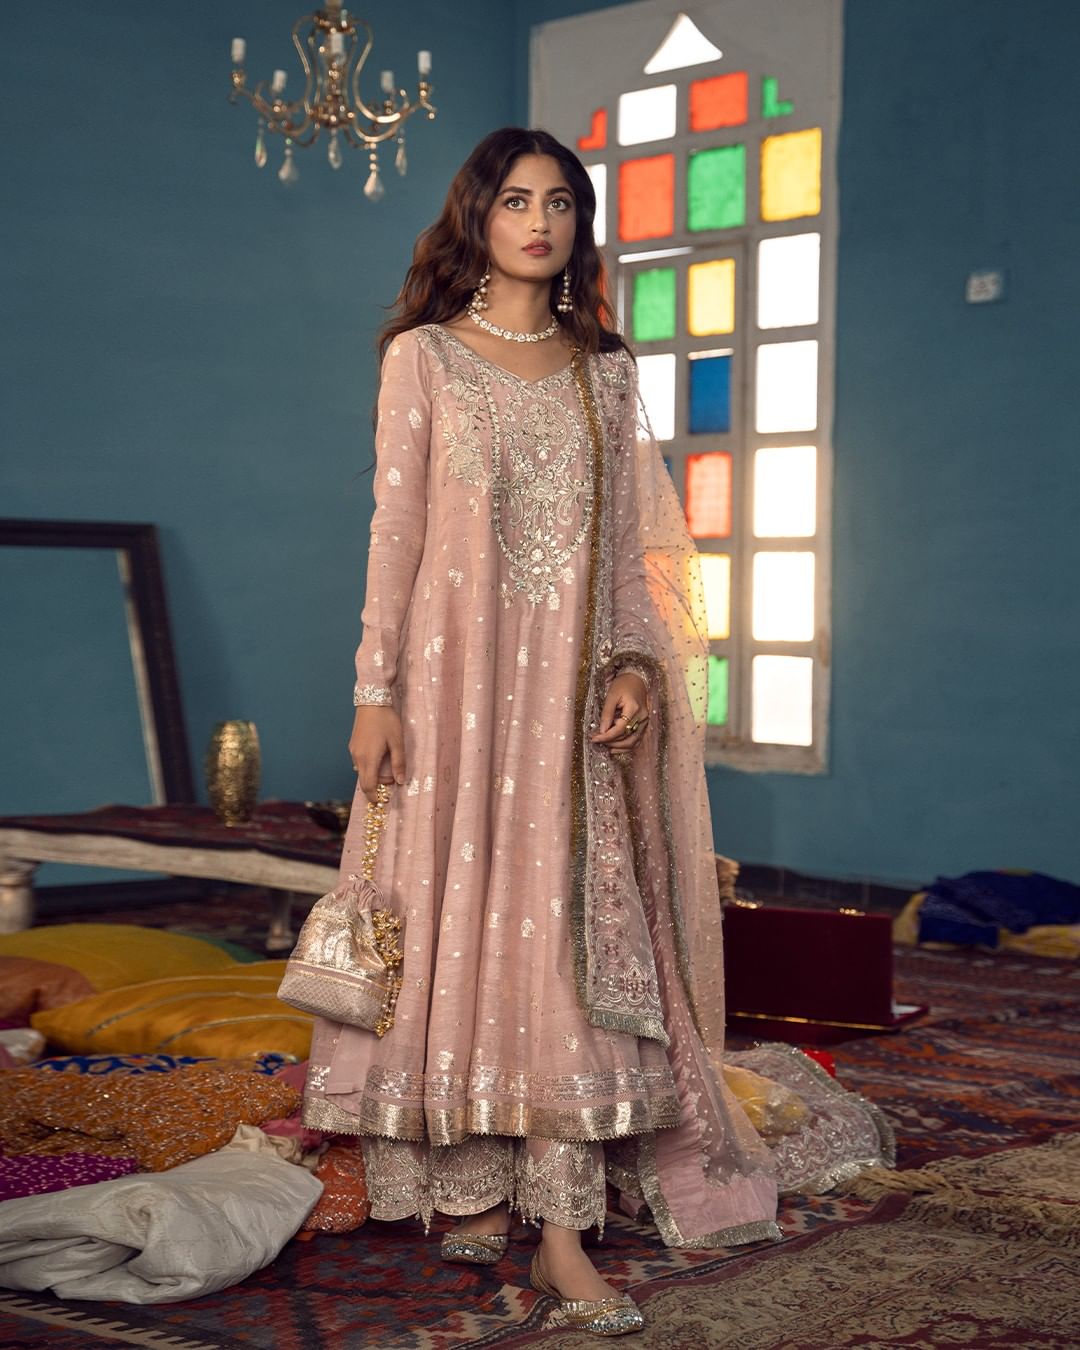 Sajal Aly recent clicks from Faiza Saqlain's Vasl-e-Yaar collection